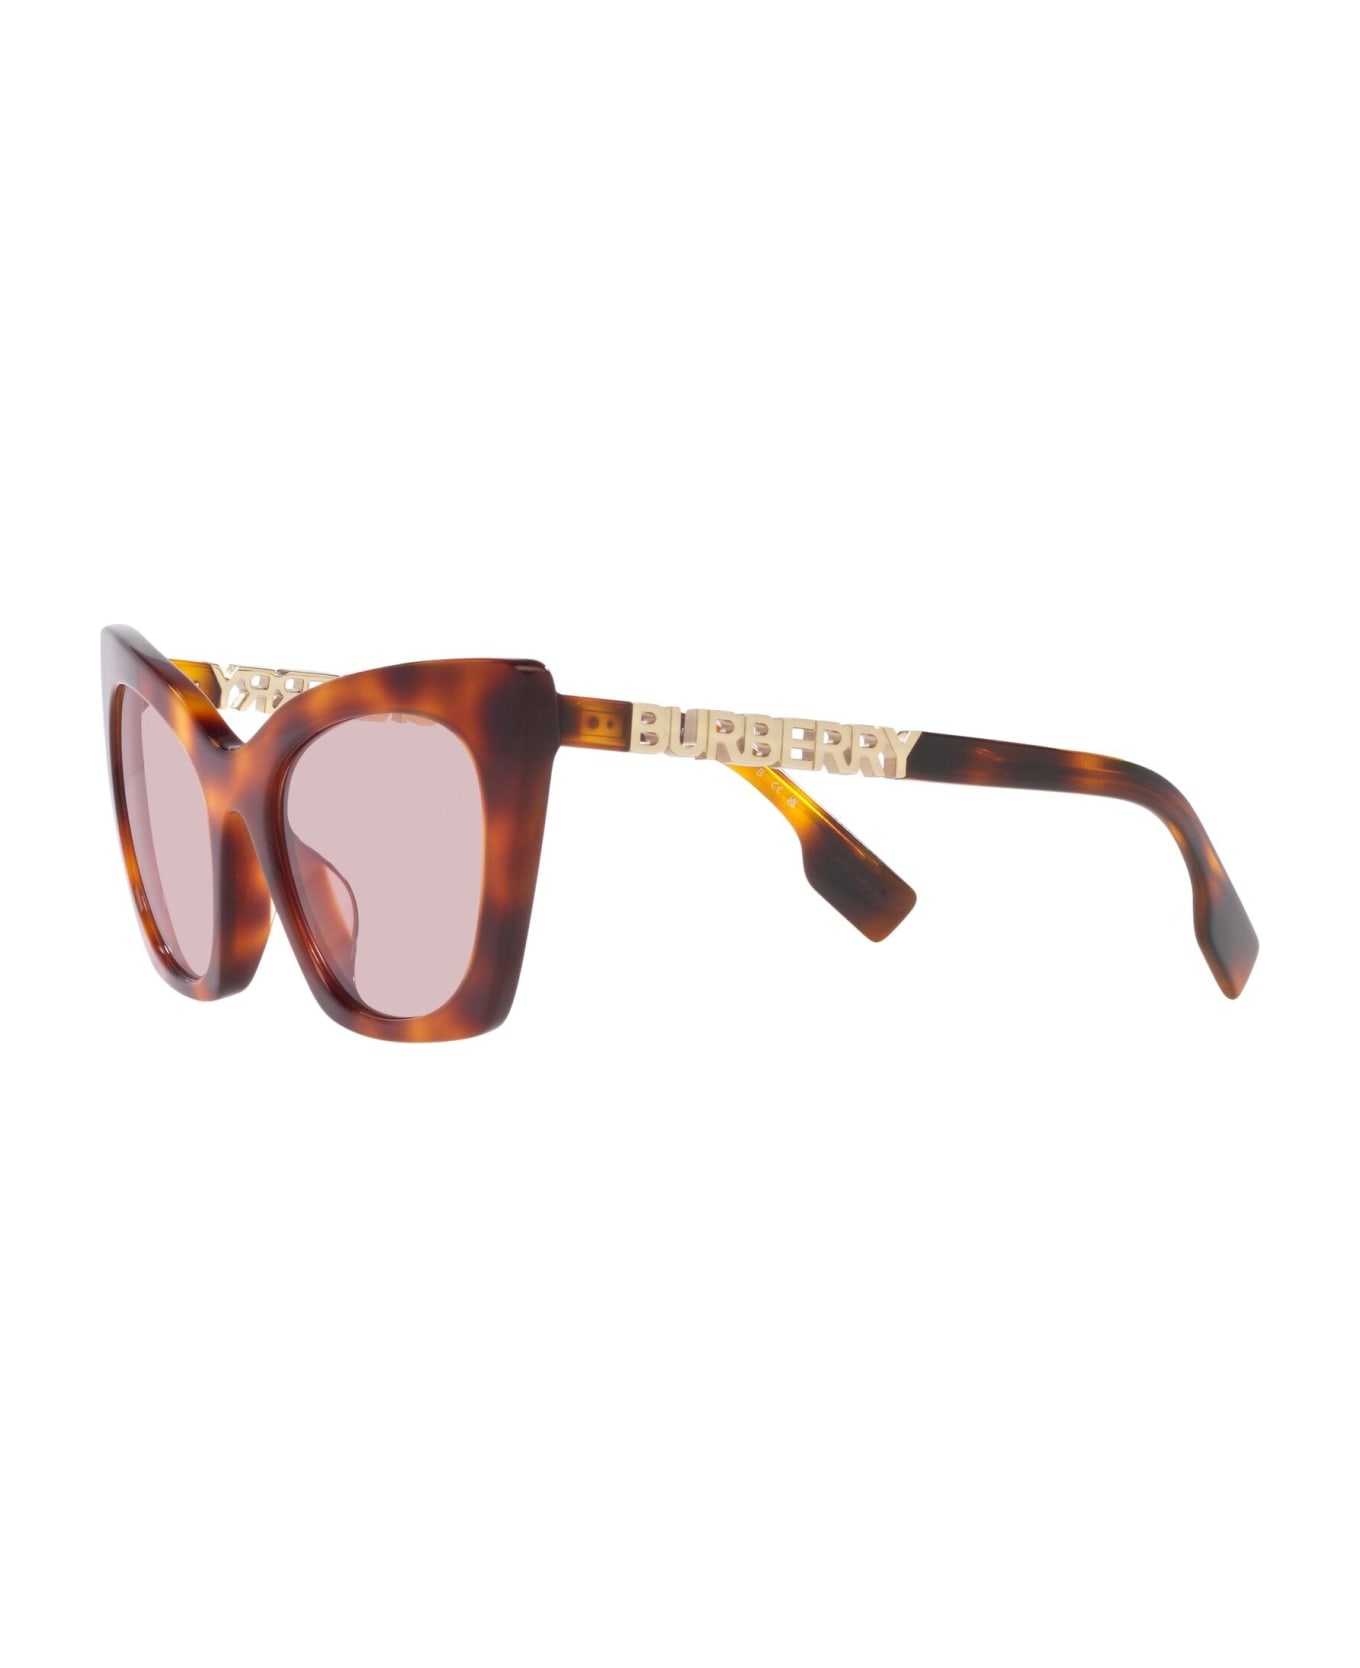 Burberry Eyewear Sunglasses - Marrone  e blu tartarugato/Marrone